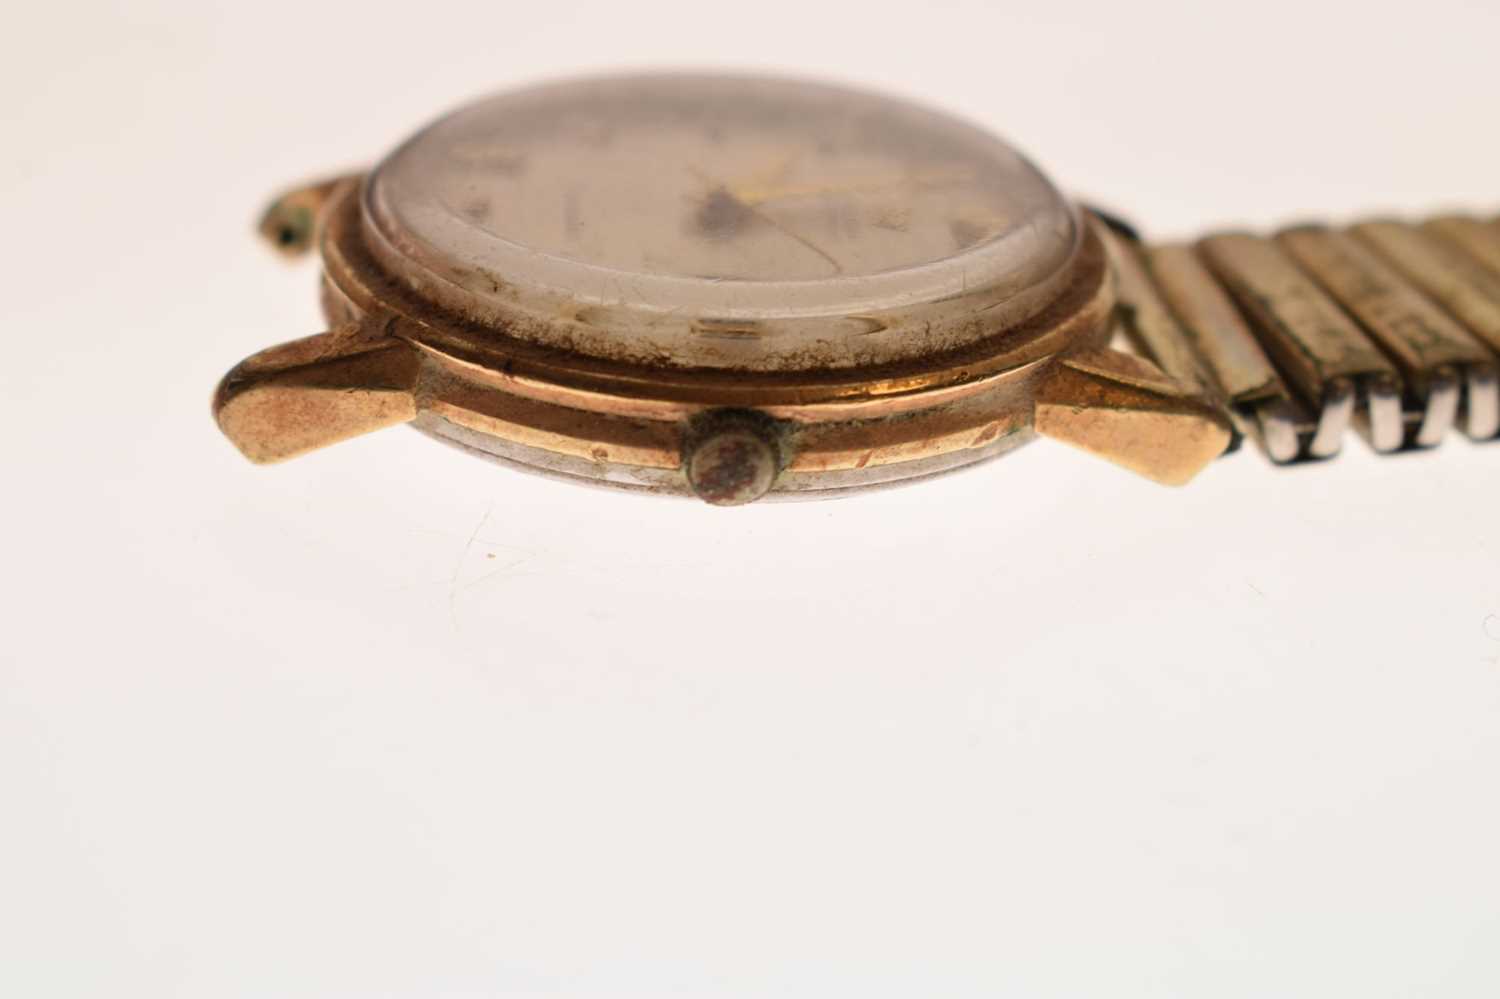 Omega - Gentleman's Seamaster gold plated bracelet watch - Image 4 of 8